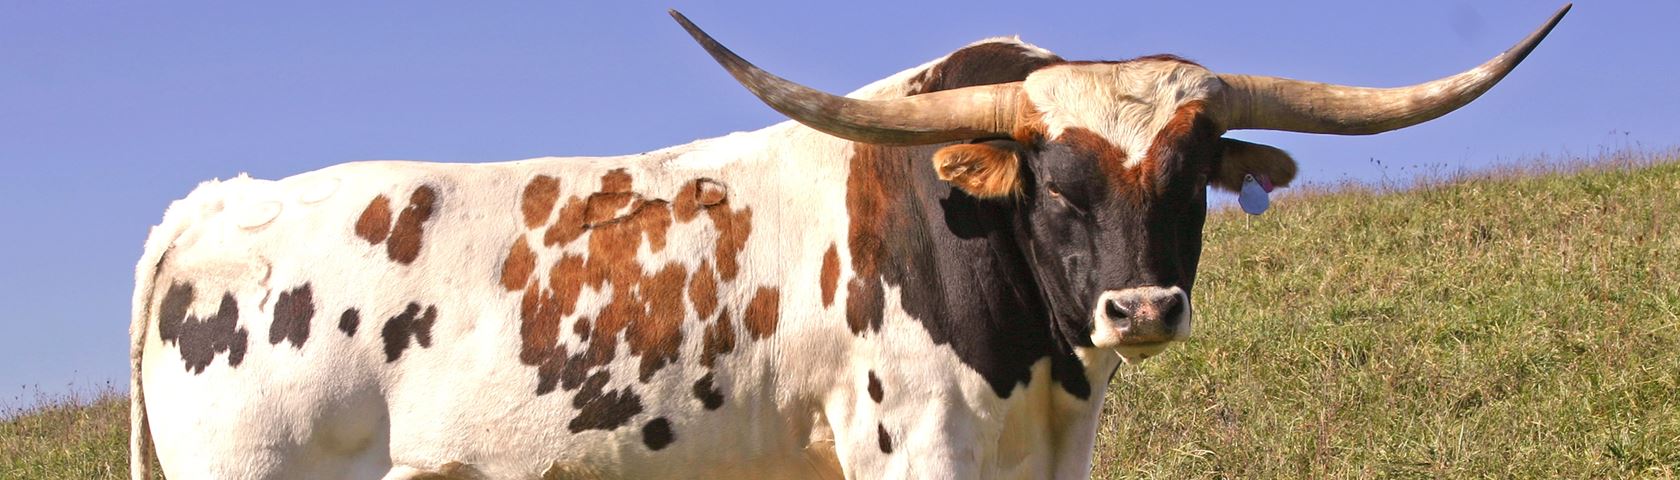 Prize Texas Longhorn Bull